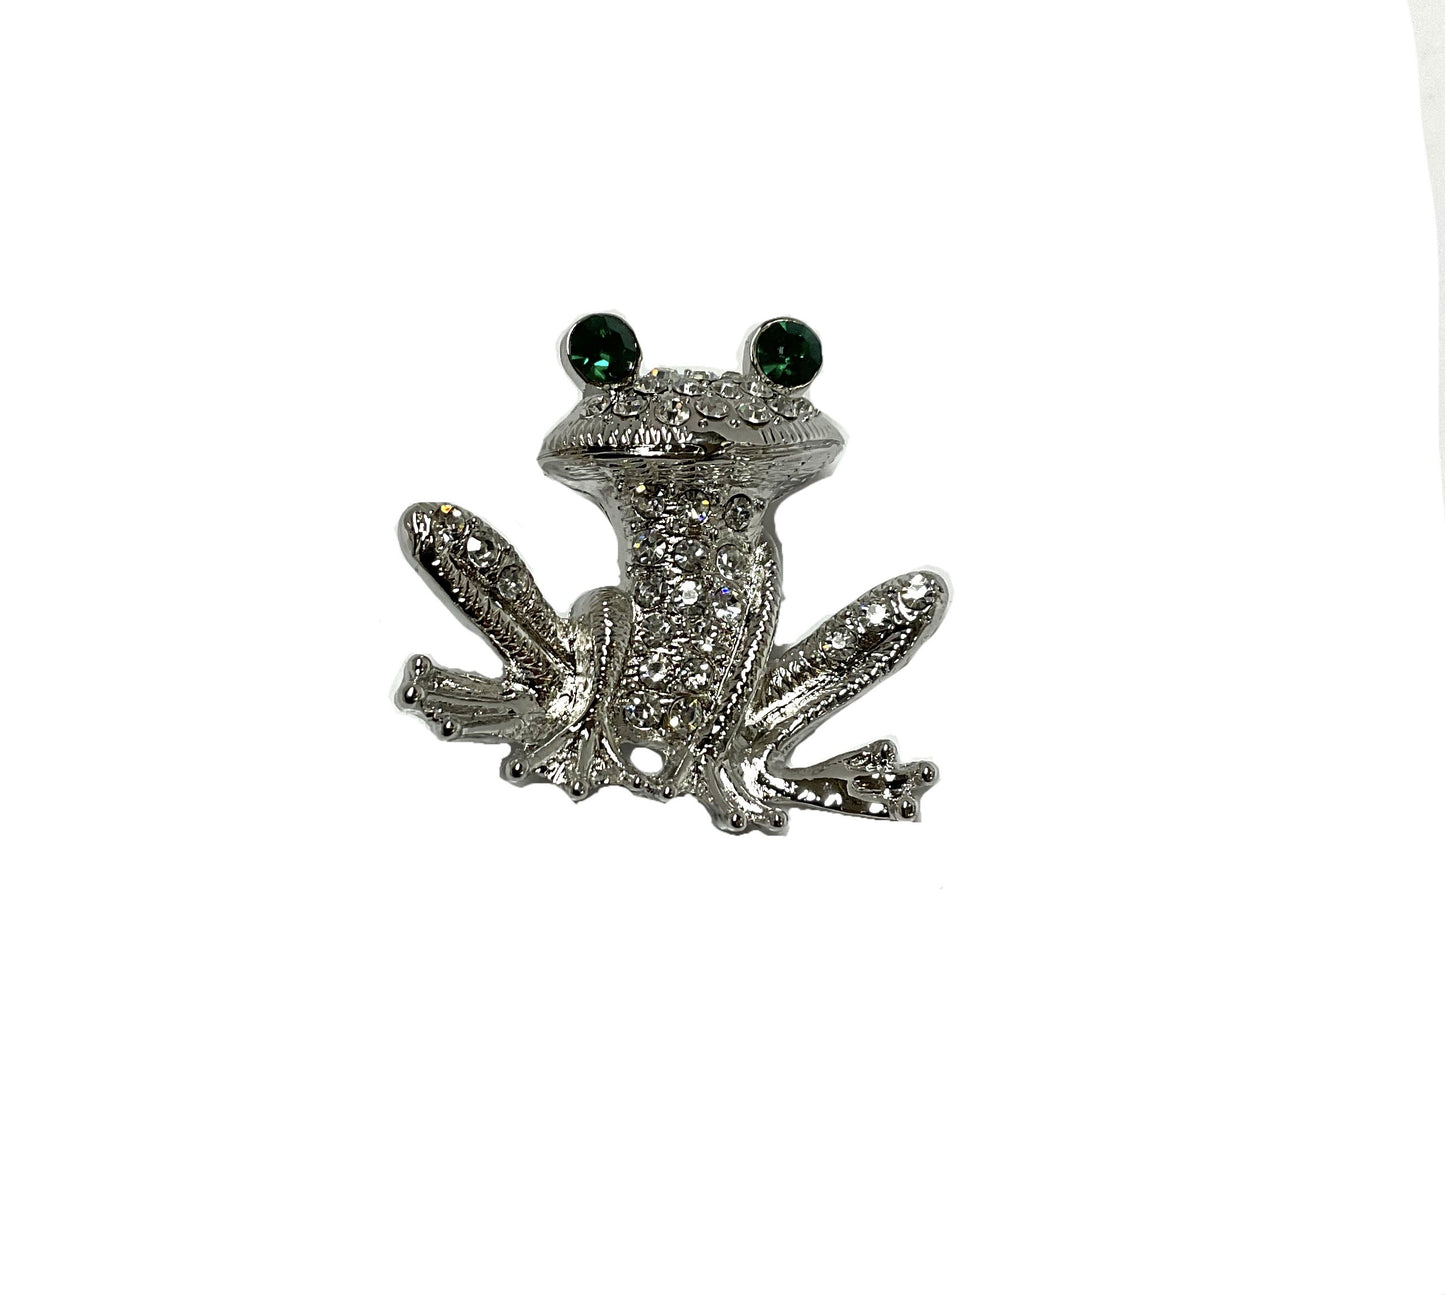 Frog Pin#19-141307CL